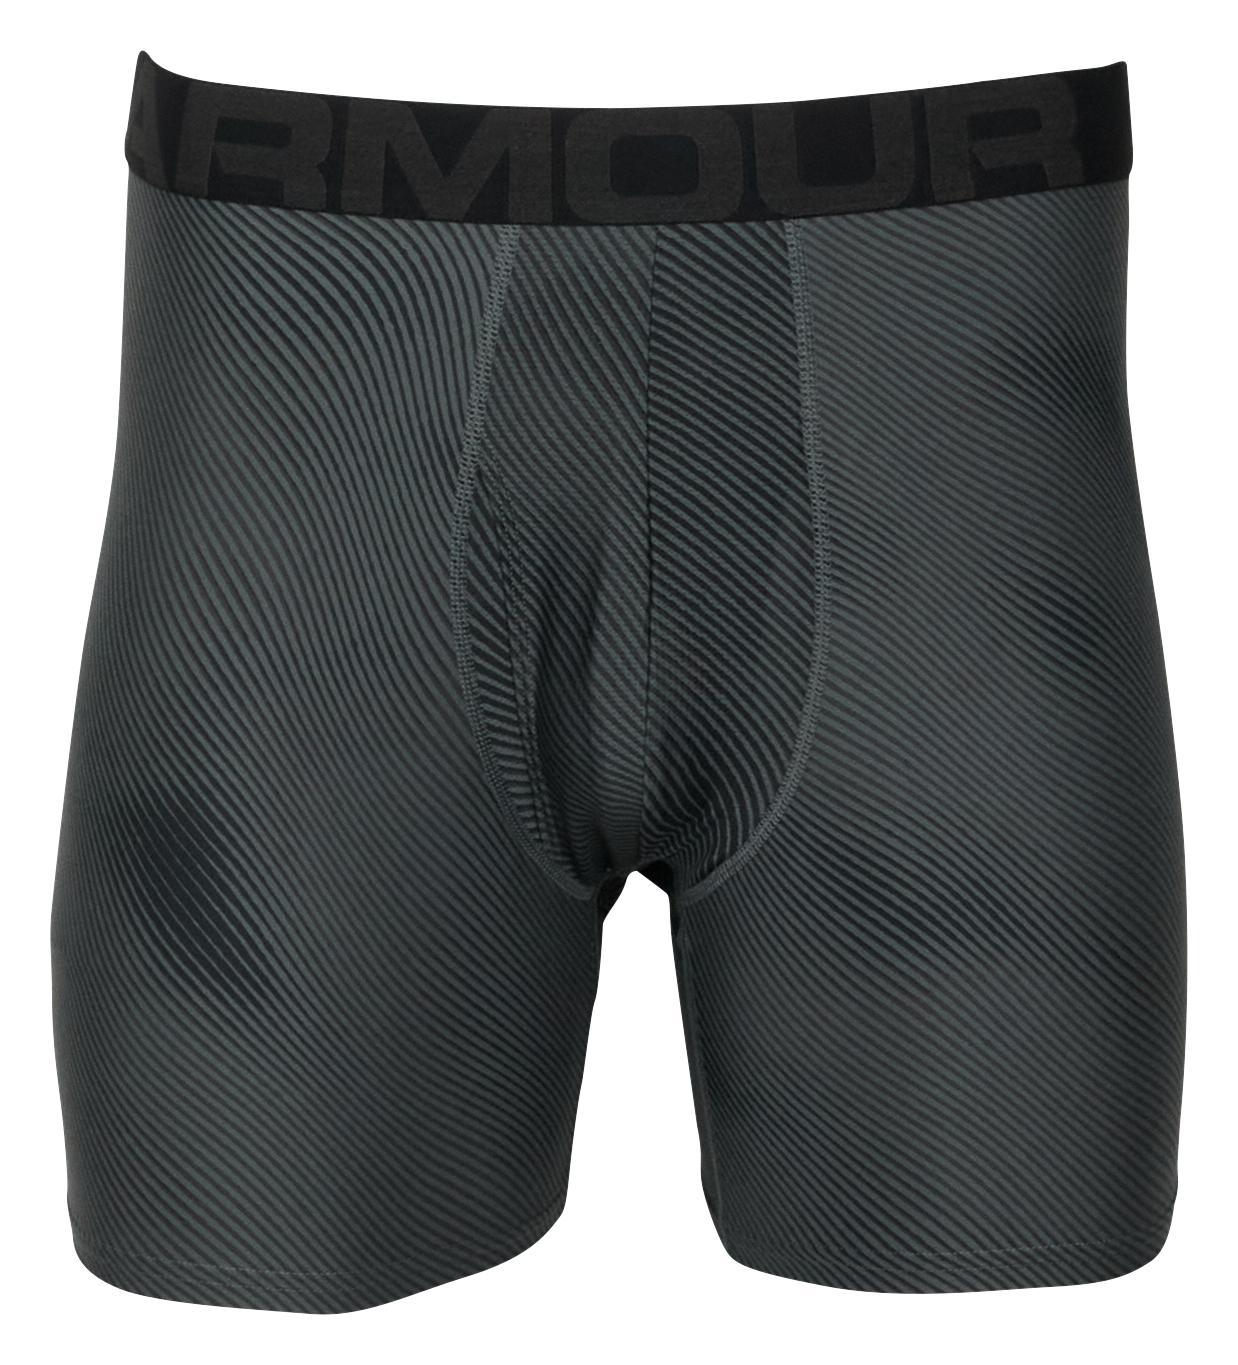 Under Armour Tech 6"" Patterned Boxerjock Shorts for Men - Pitch/Jet Gray - XL